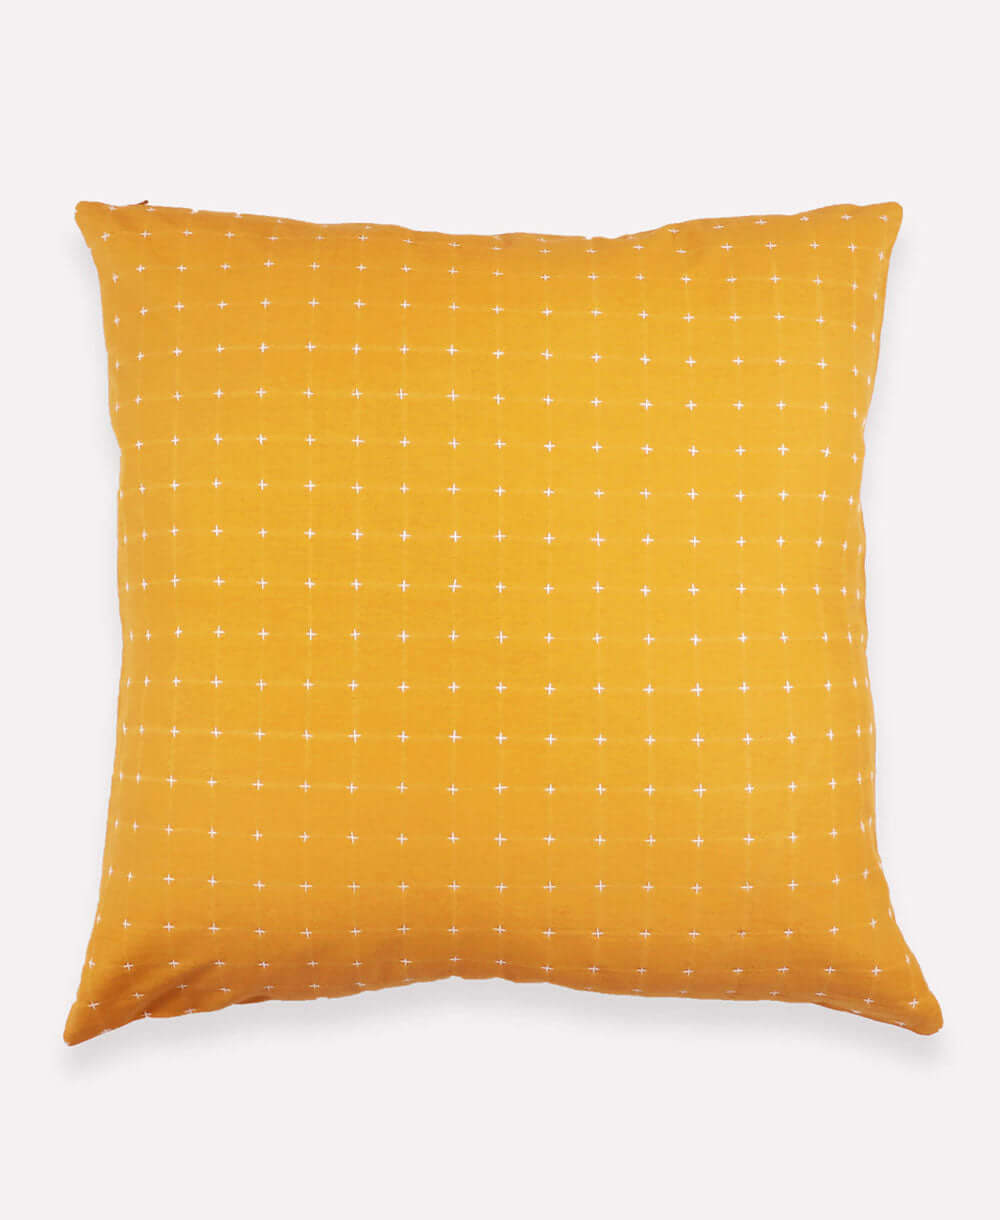 Cross-stitch Throw Pillow